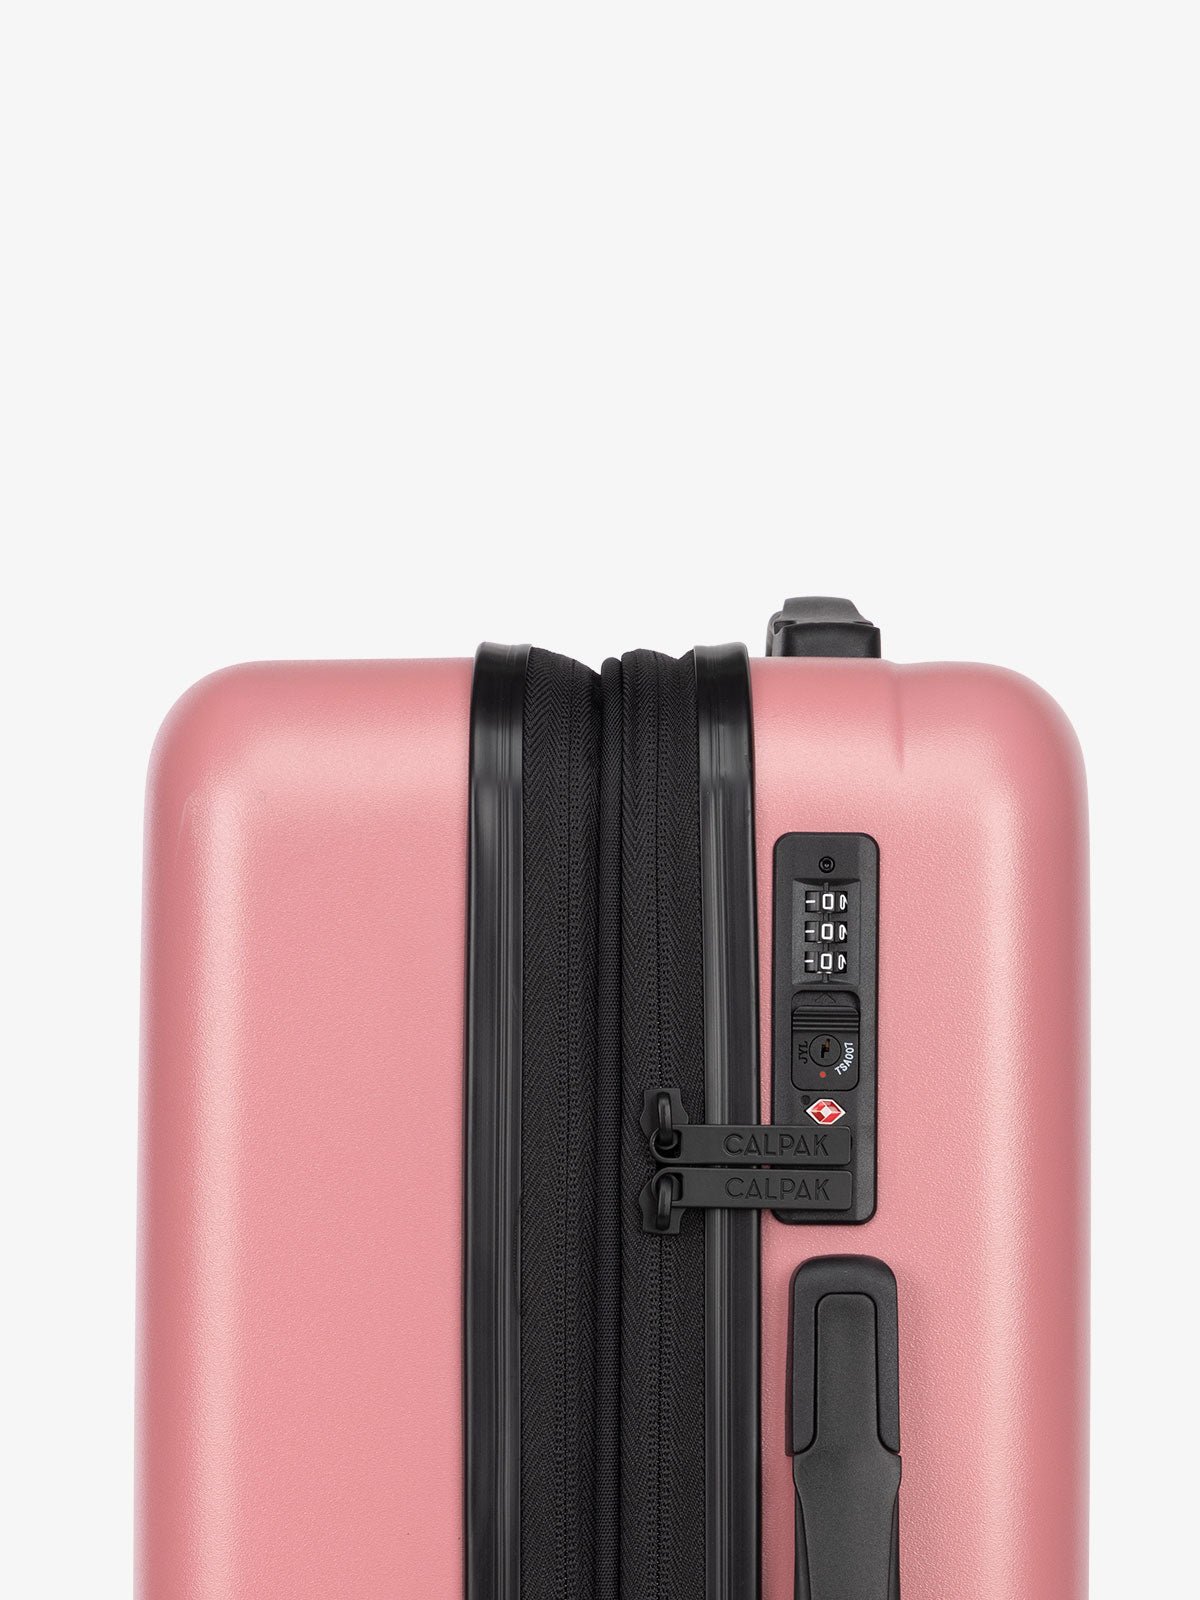 CALPAK Starter Bundle expandable Luggage set with TSA approved Lock in pink